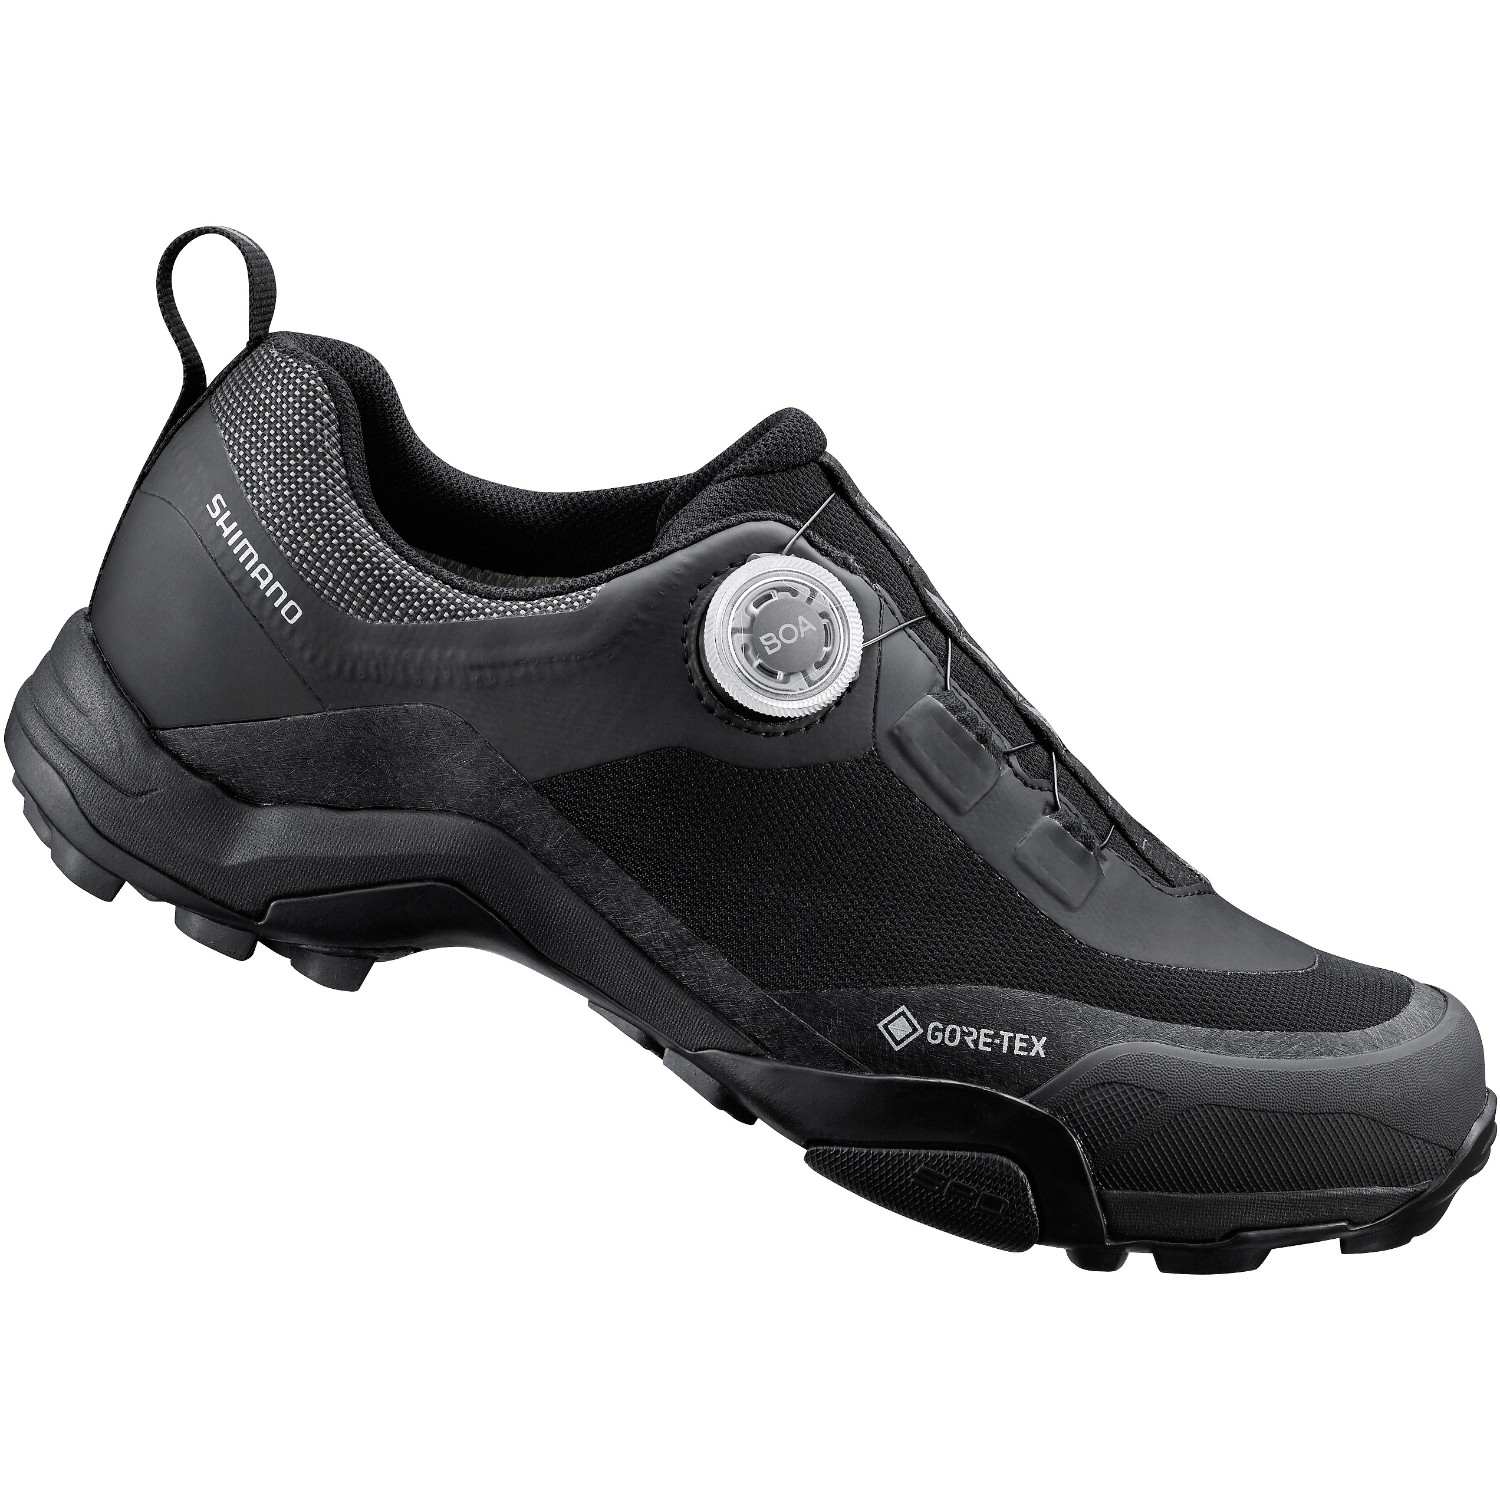 waterproof cycling shoes